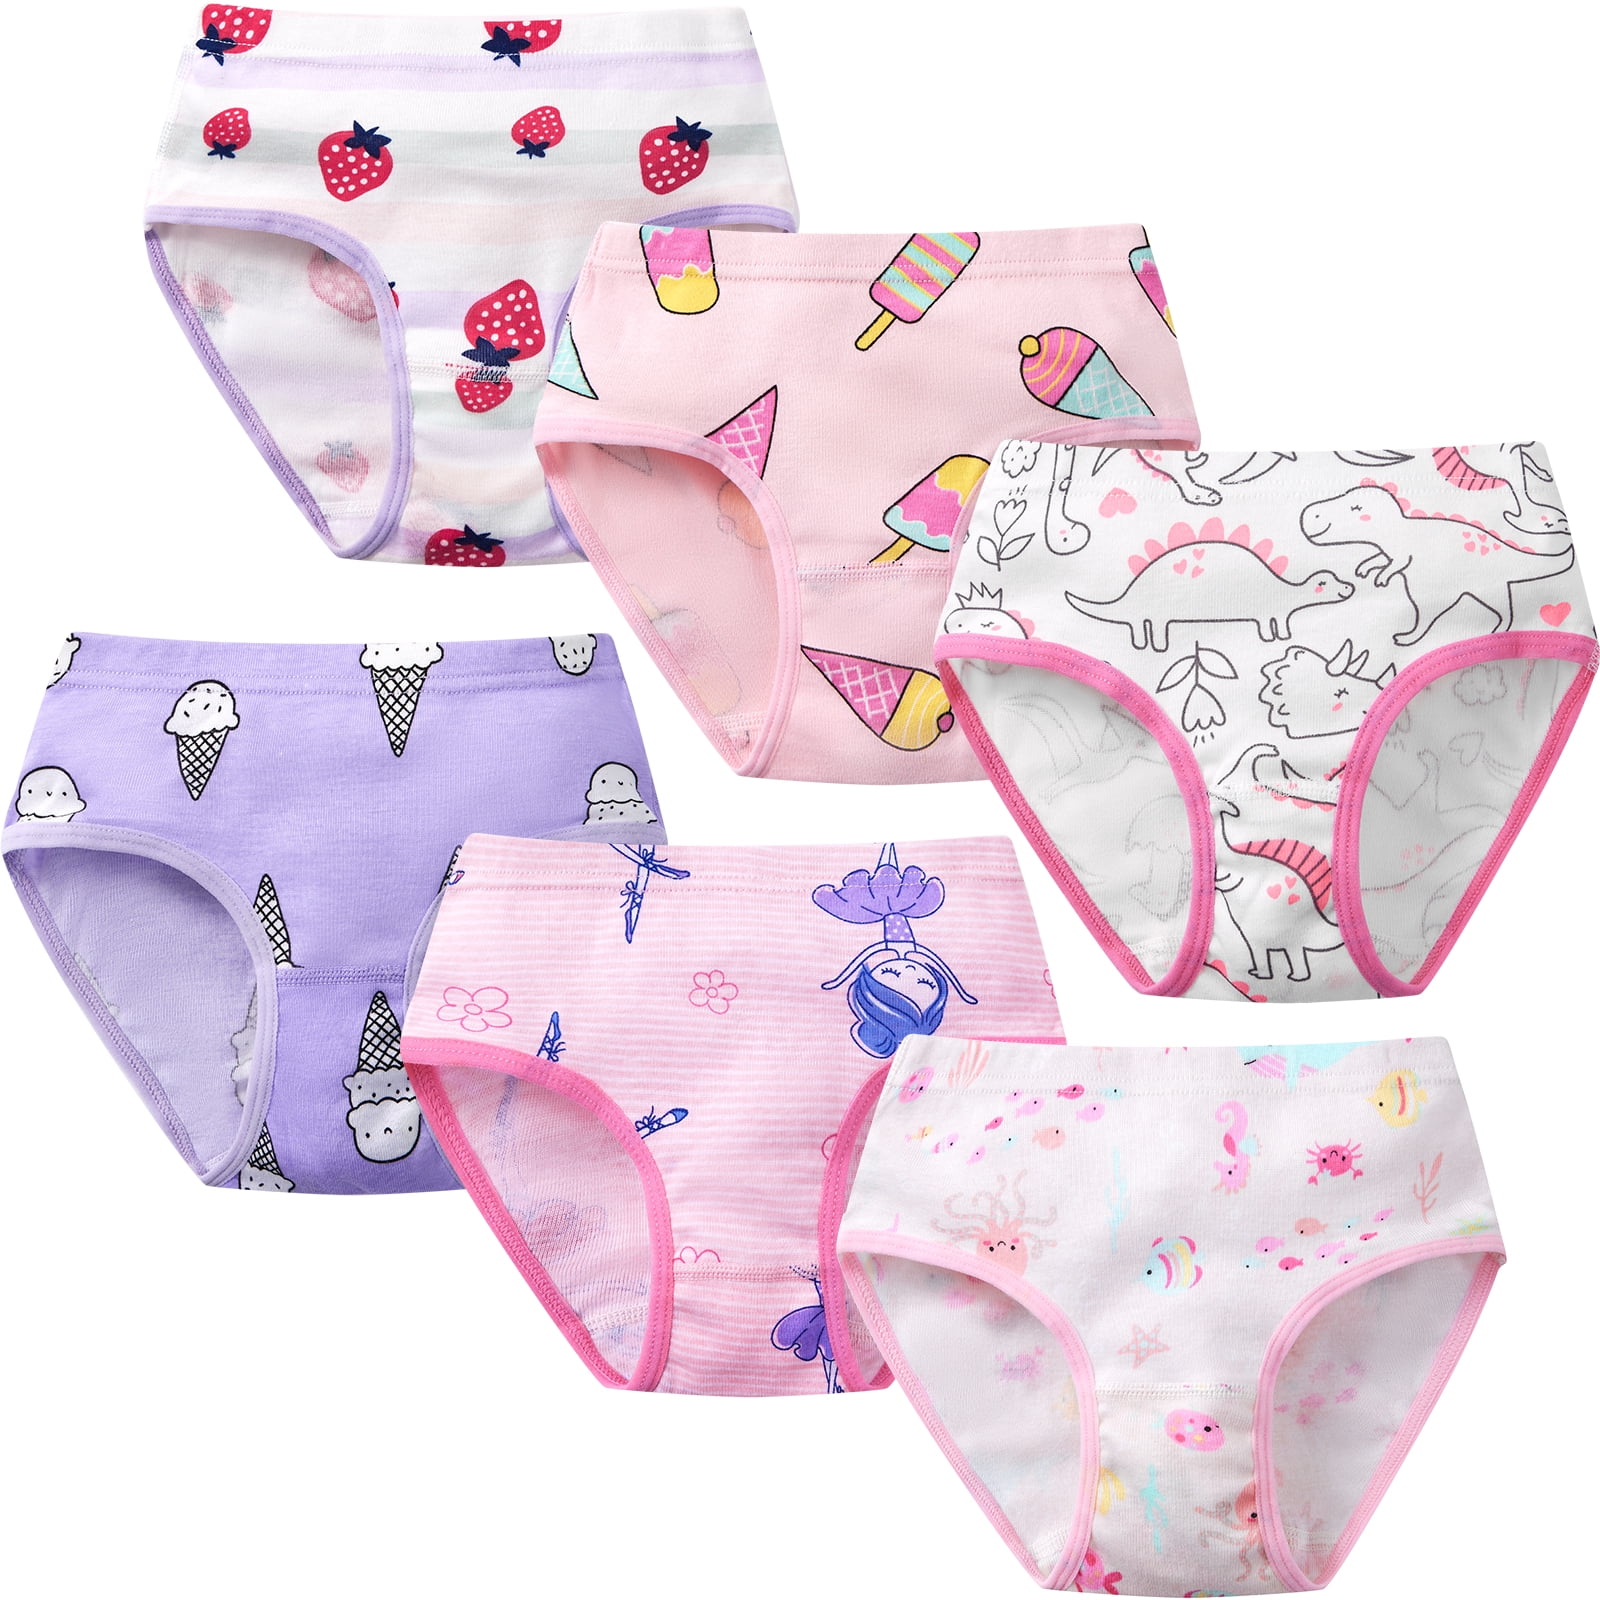 Cute Cartoon Polka Dot Cotton Toddler Underwear For Girls Sizes 6 12 212044  From Deng08, $10.24